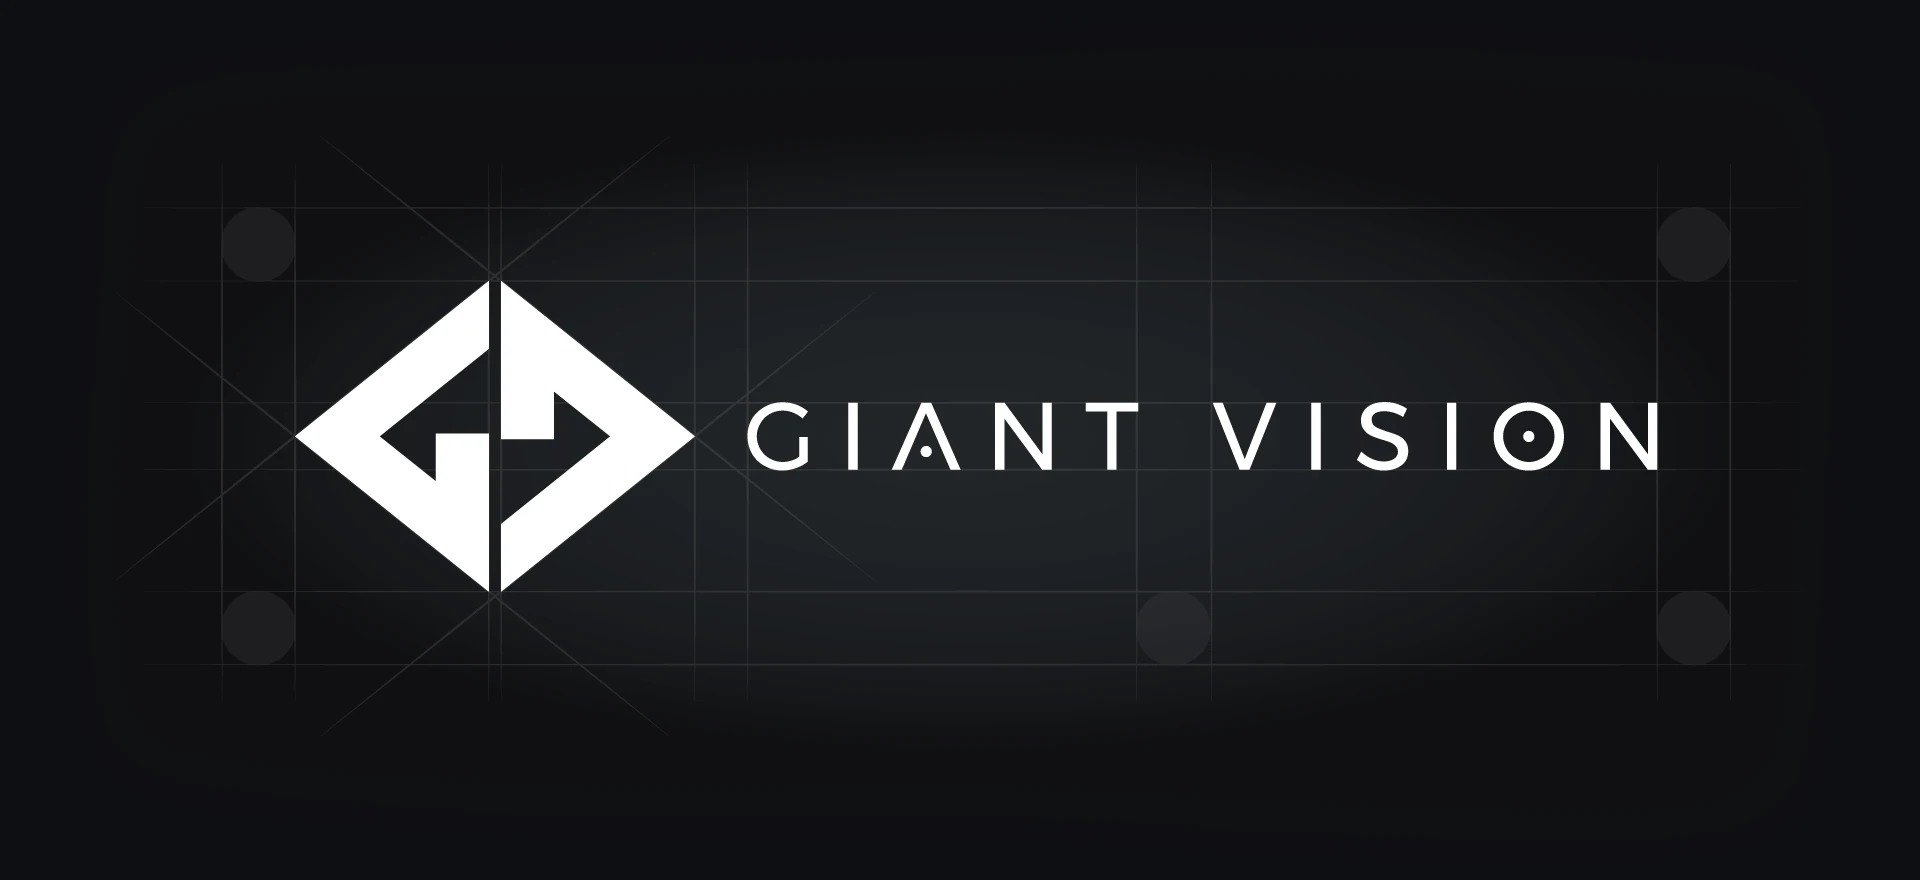 Giant Vision - Logo design